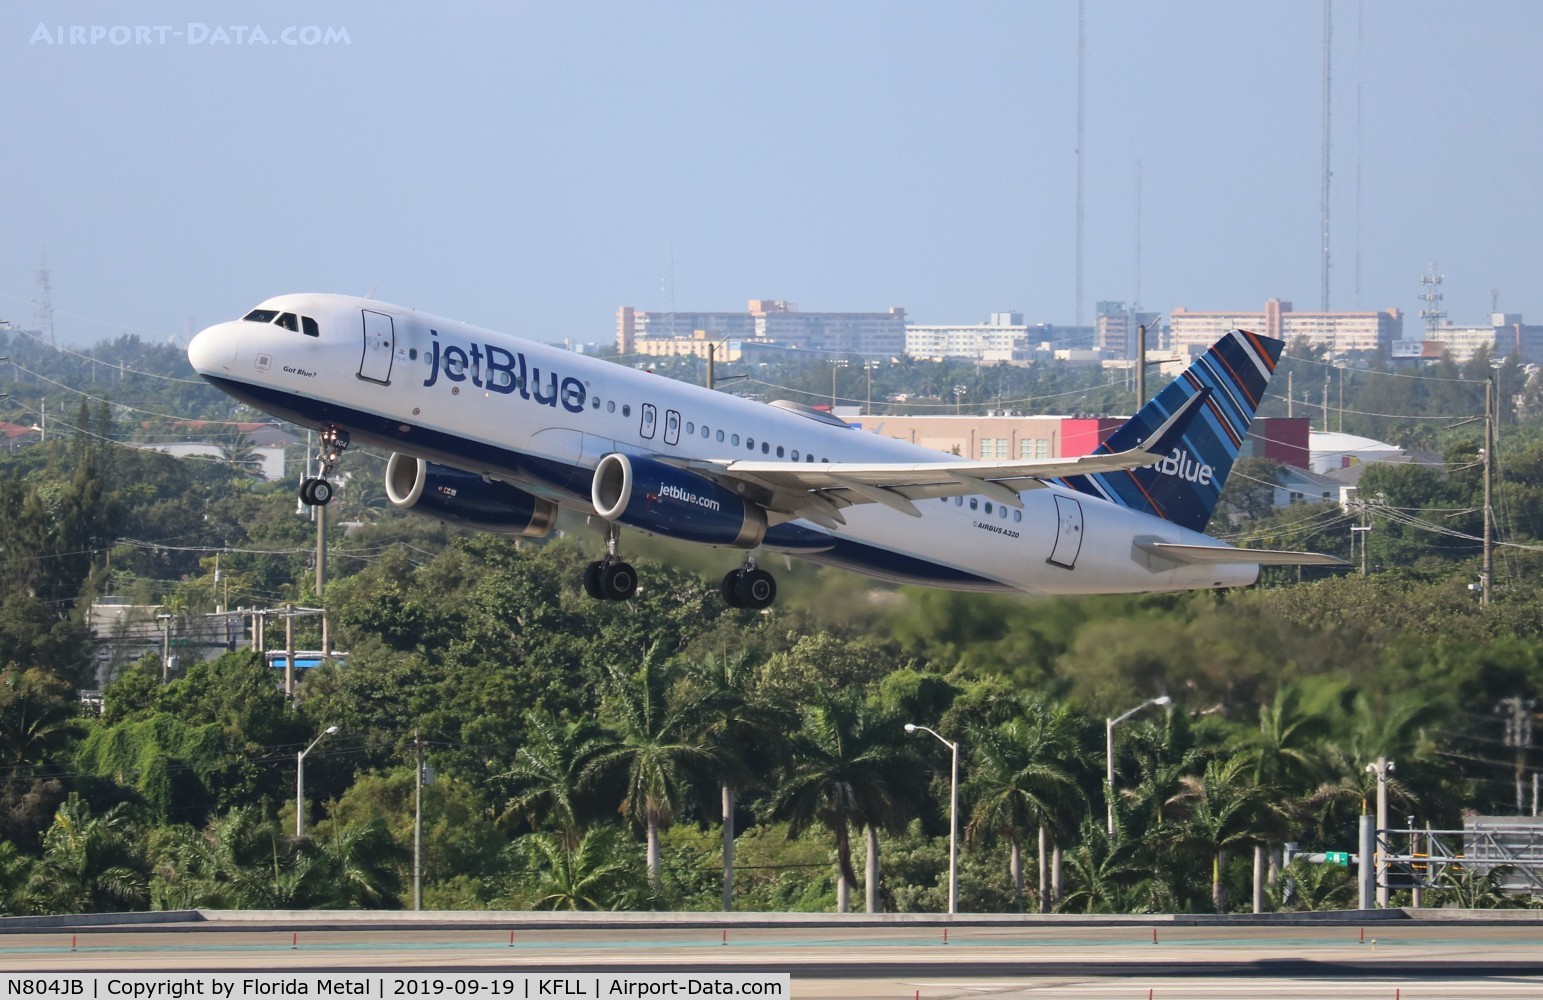 N804JB, 2012 Airbus A320-232 C/N 5142, JetBlue